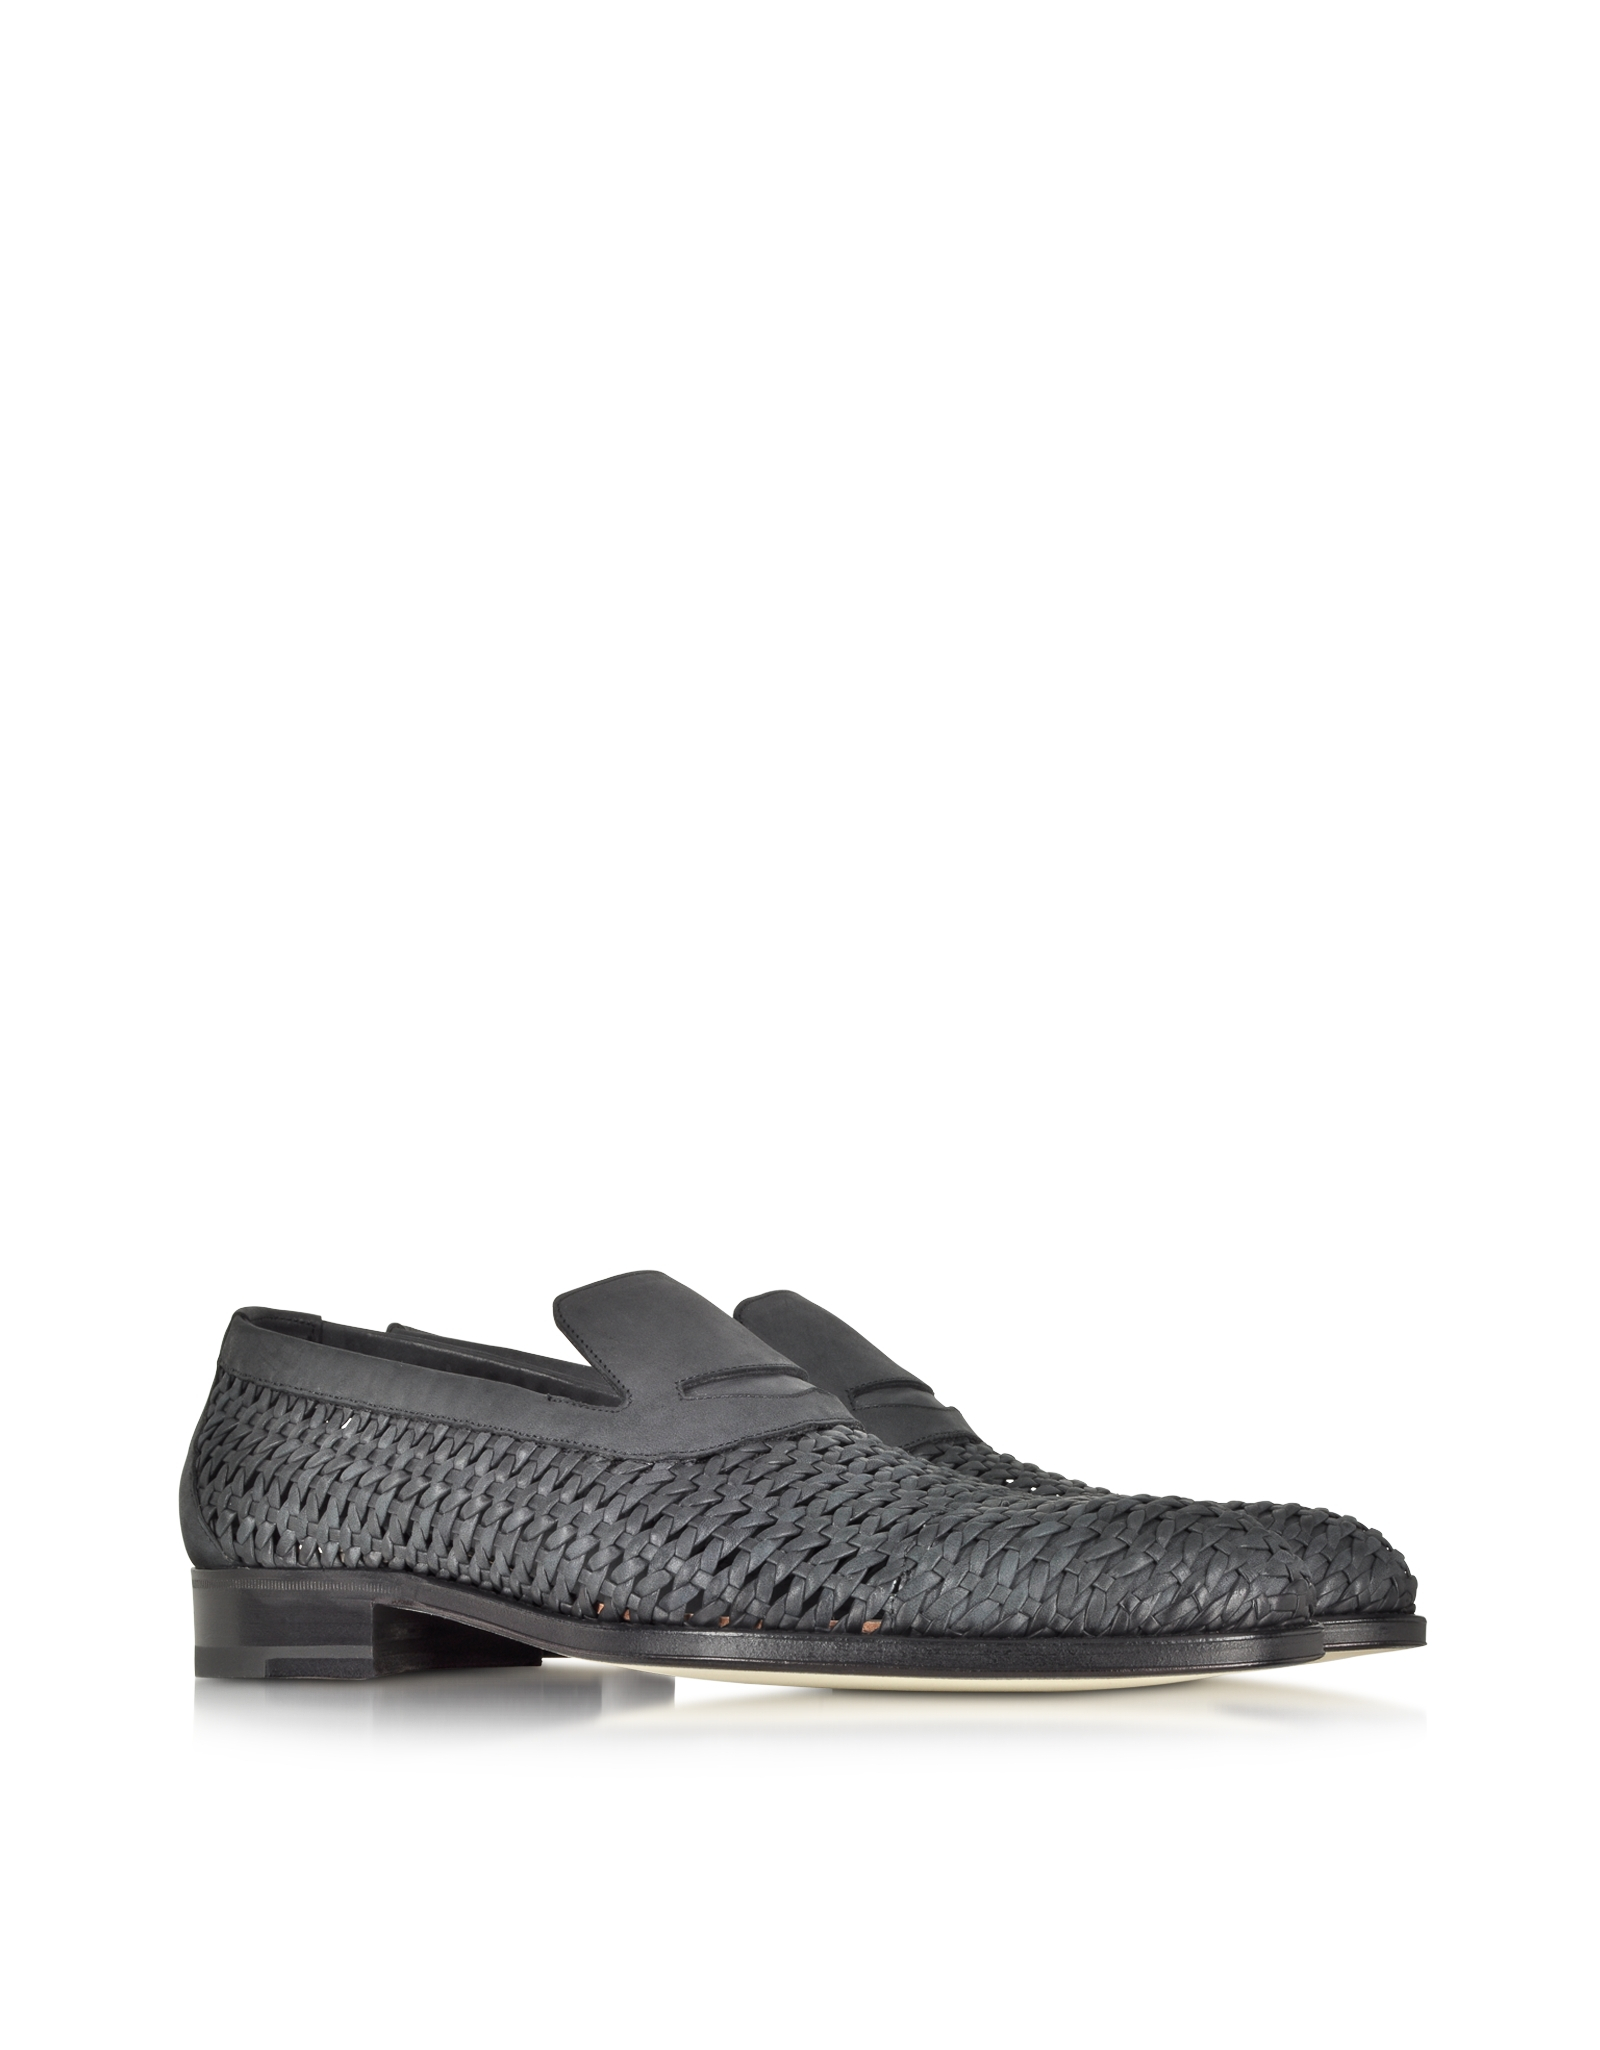 A.Testoni Black Woven Leather Slip-on Shoe for Men - Lyst